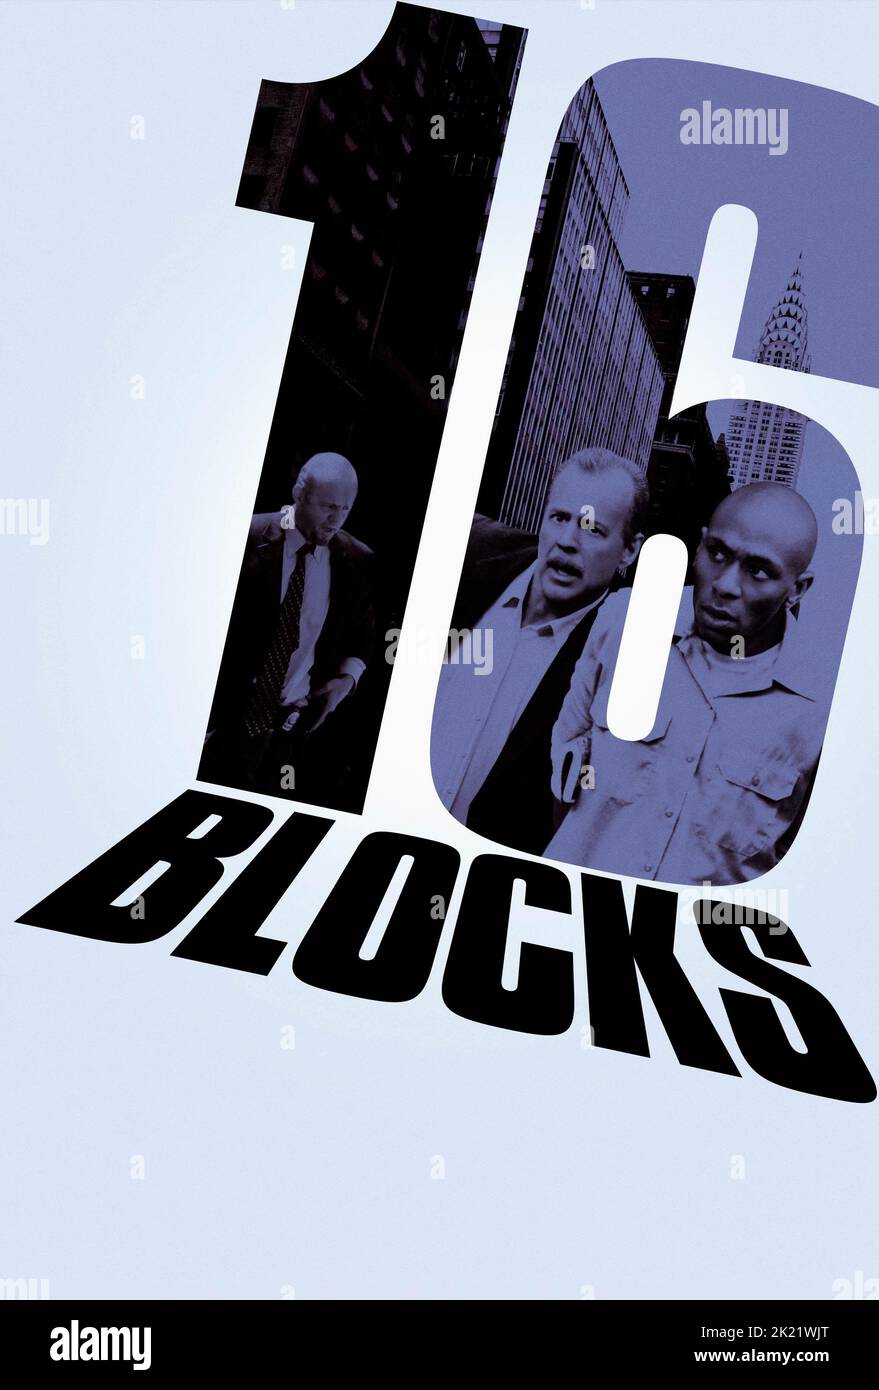 DAVID MORSE, Bruce Willis, MOS DEF POSTER, 16 blocchi, 2006 Foto Stock